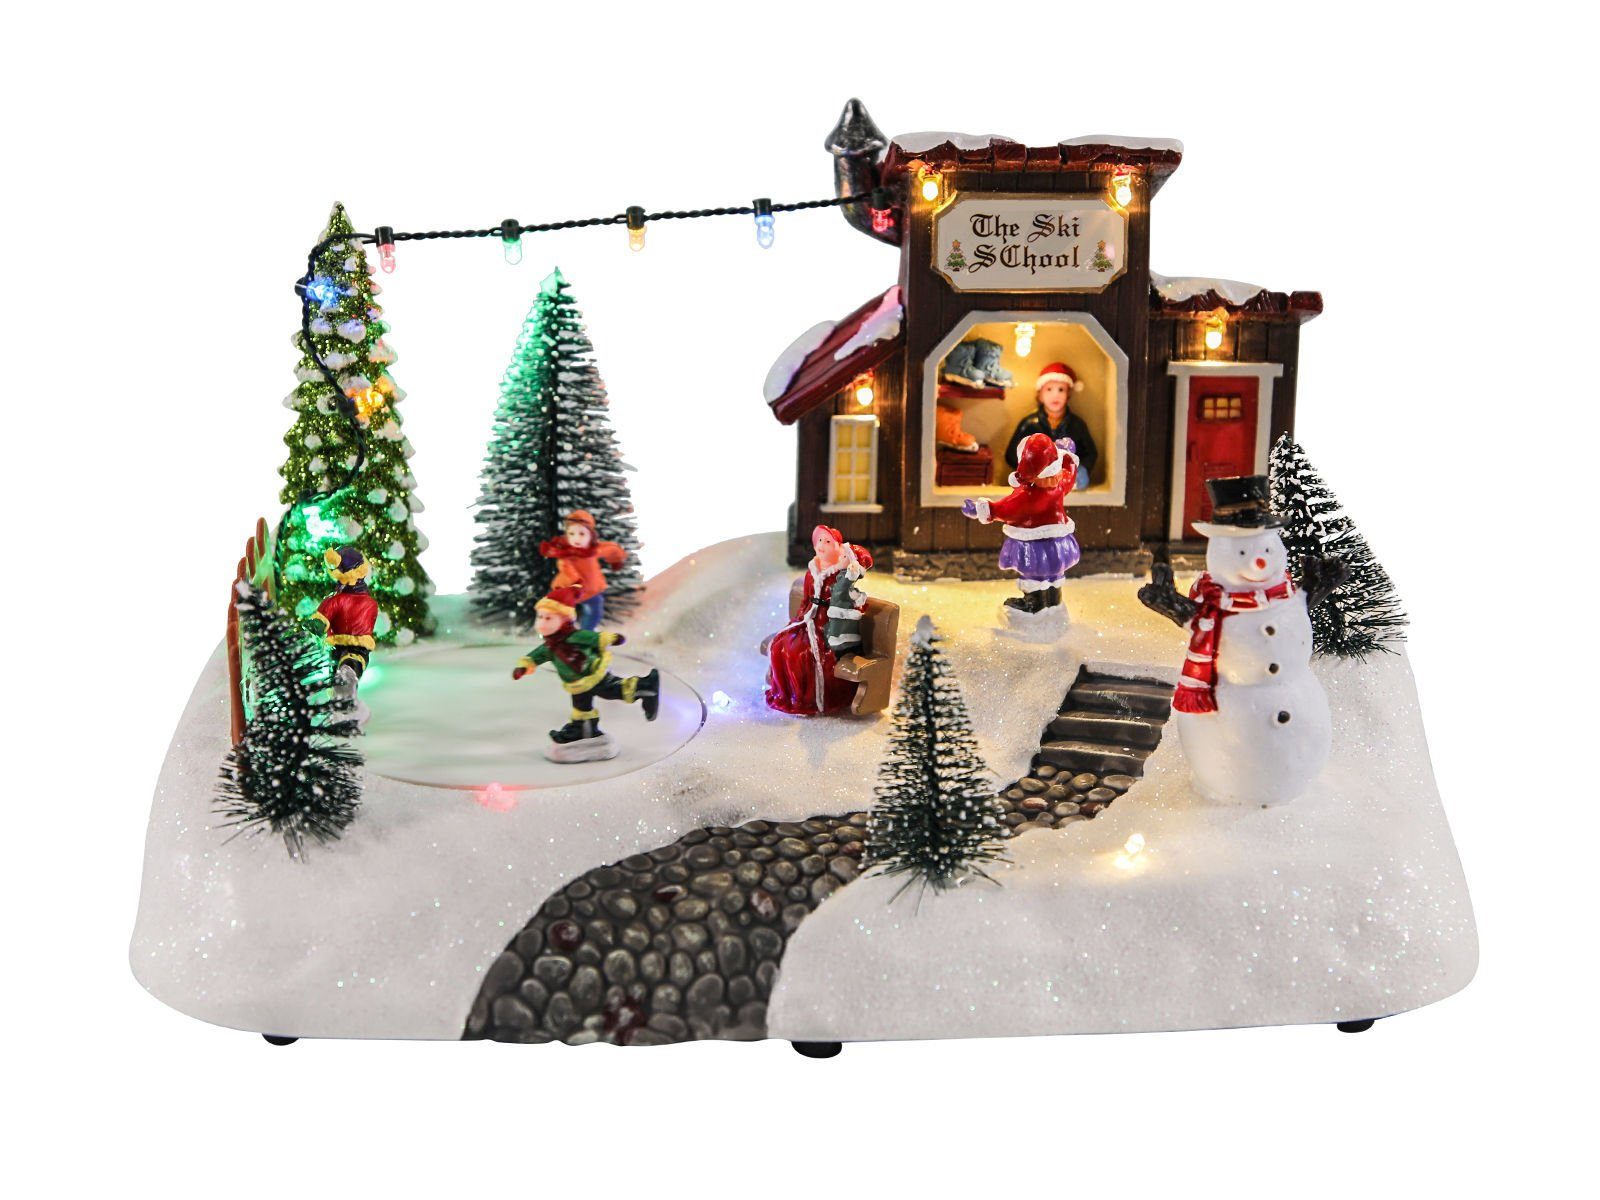 Spetebo Weihnachtsszene Eisbahn mit fahrenden SKI SCHOOL - Figuren THE